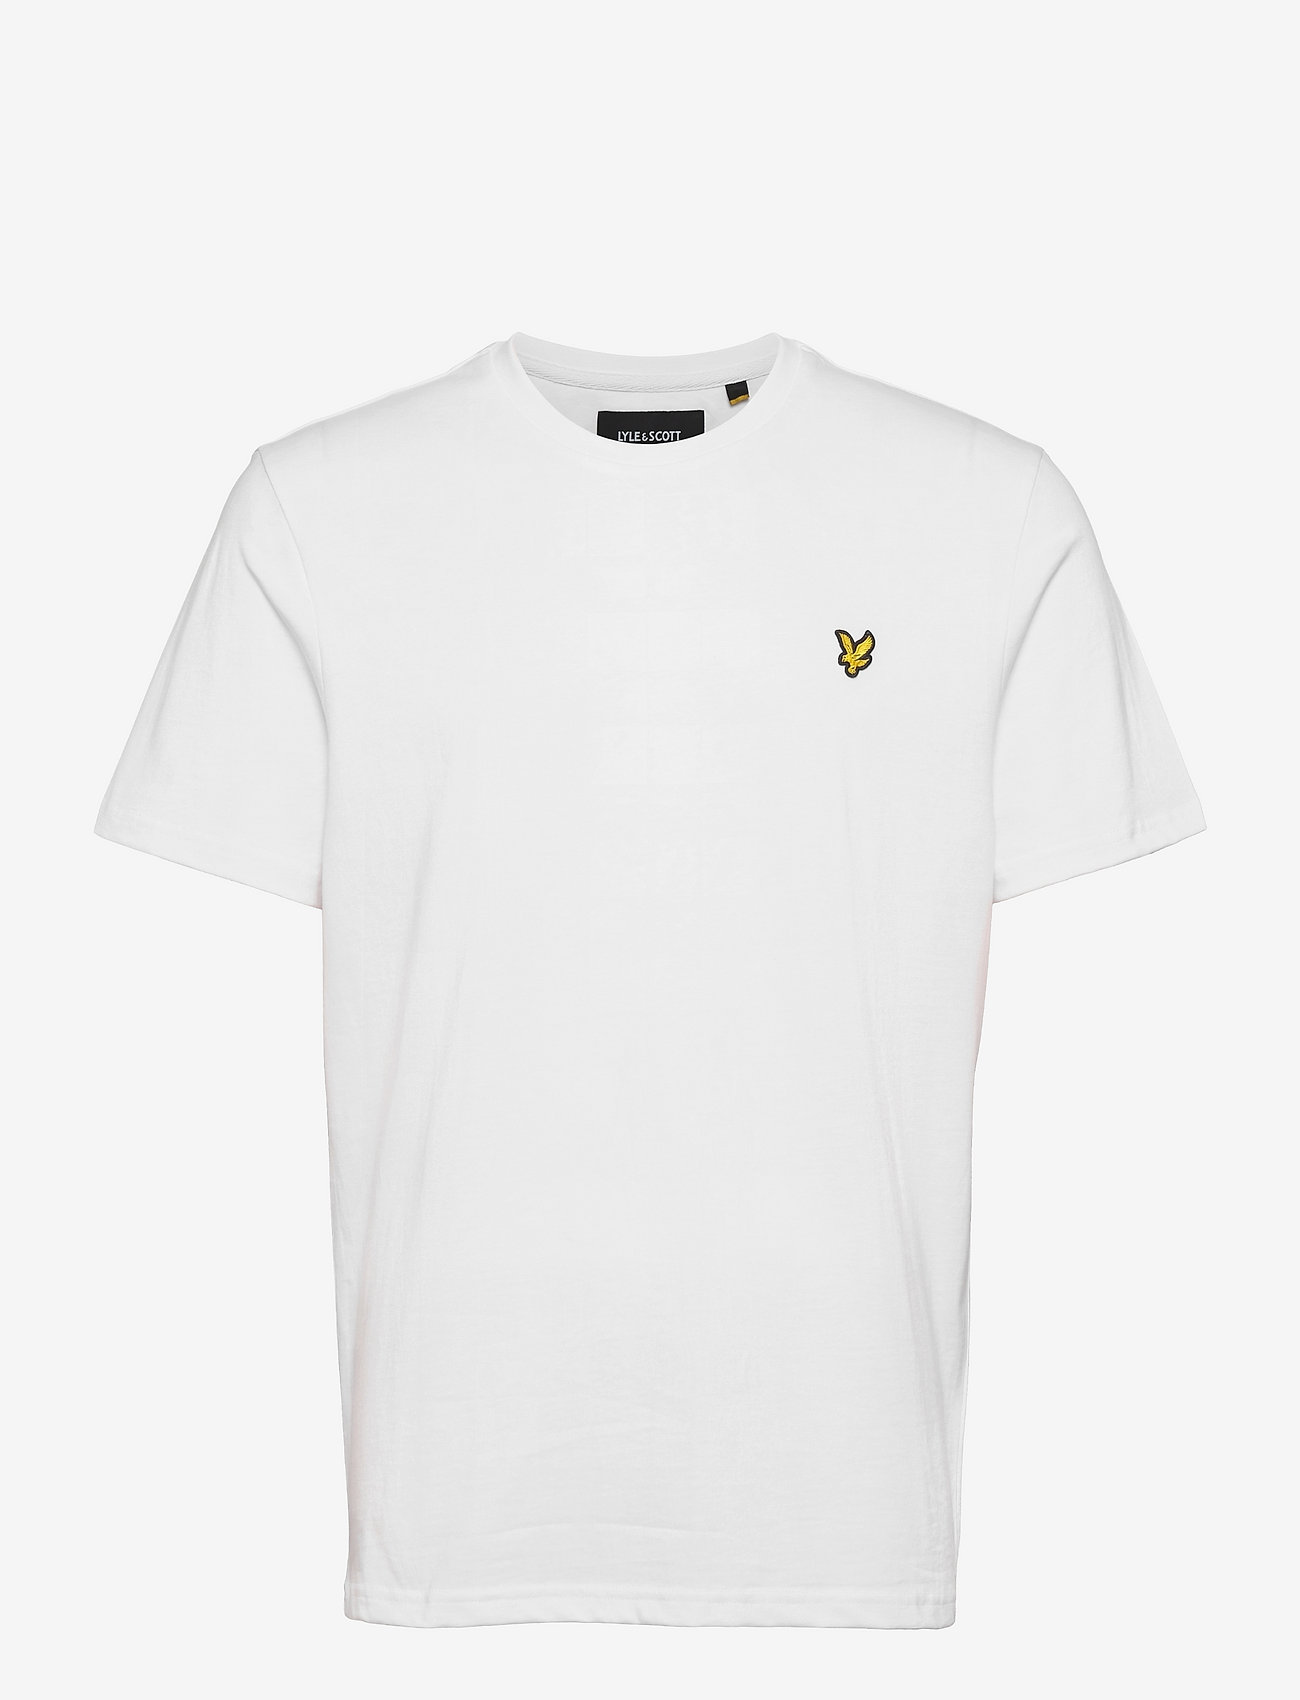 Lyle & Scott - Plain T-Shirt - t-shirts - white - 1